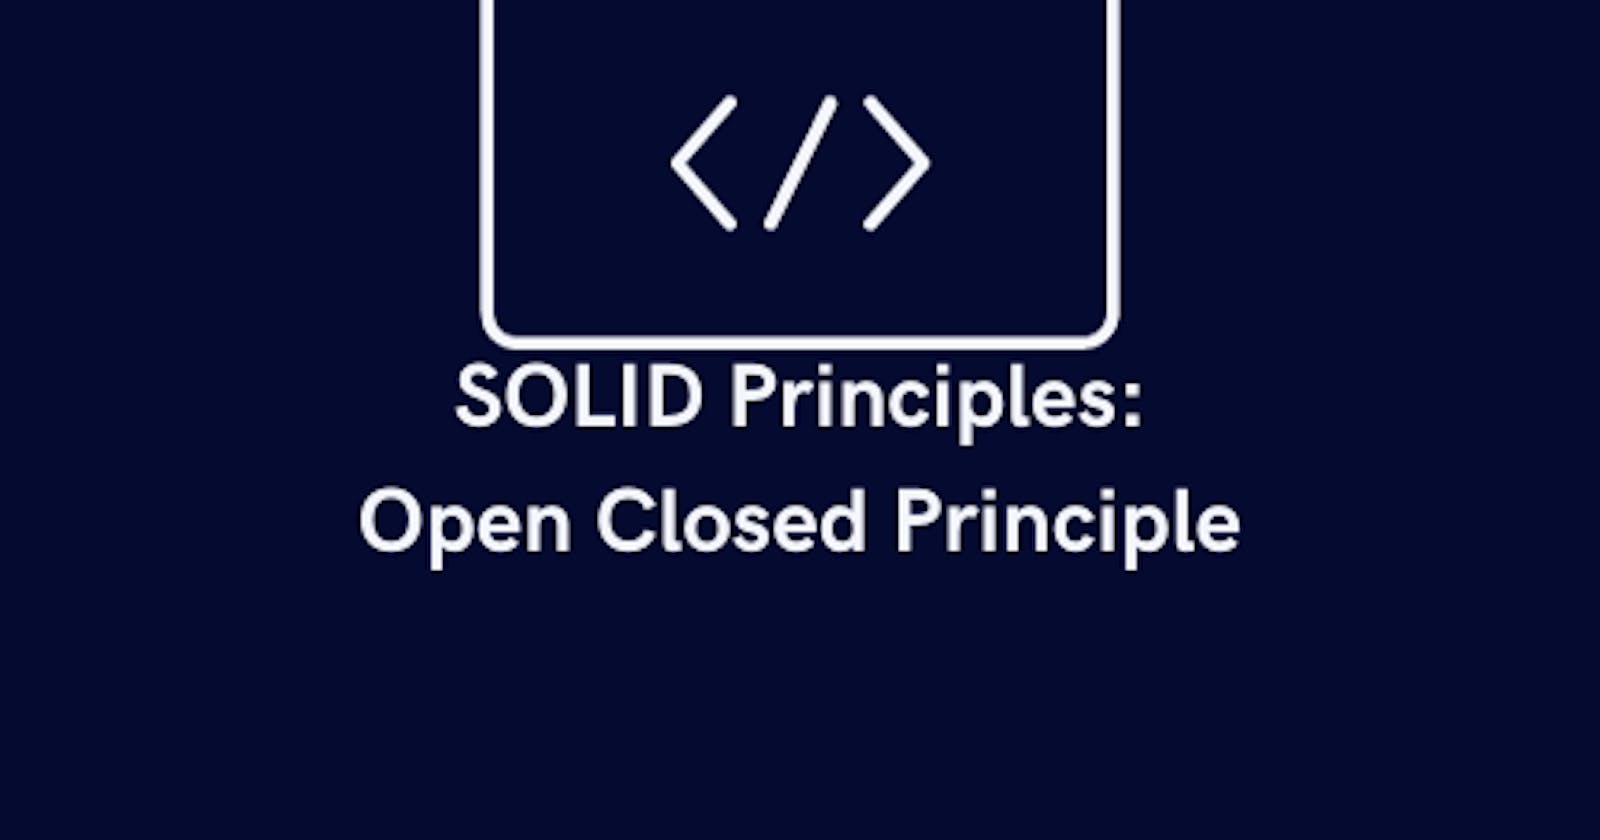 SOLID Principles: Open Closed Principle